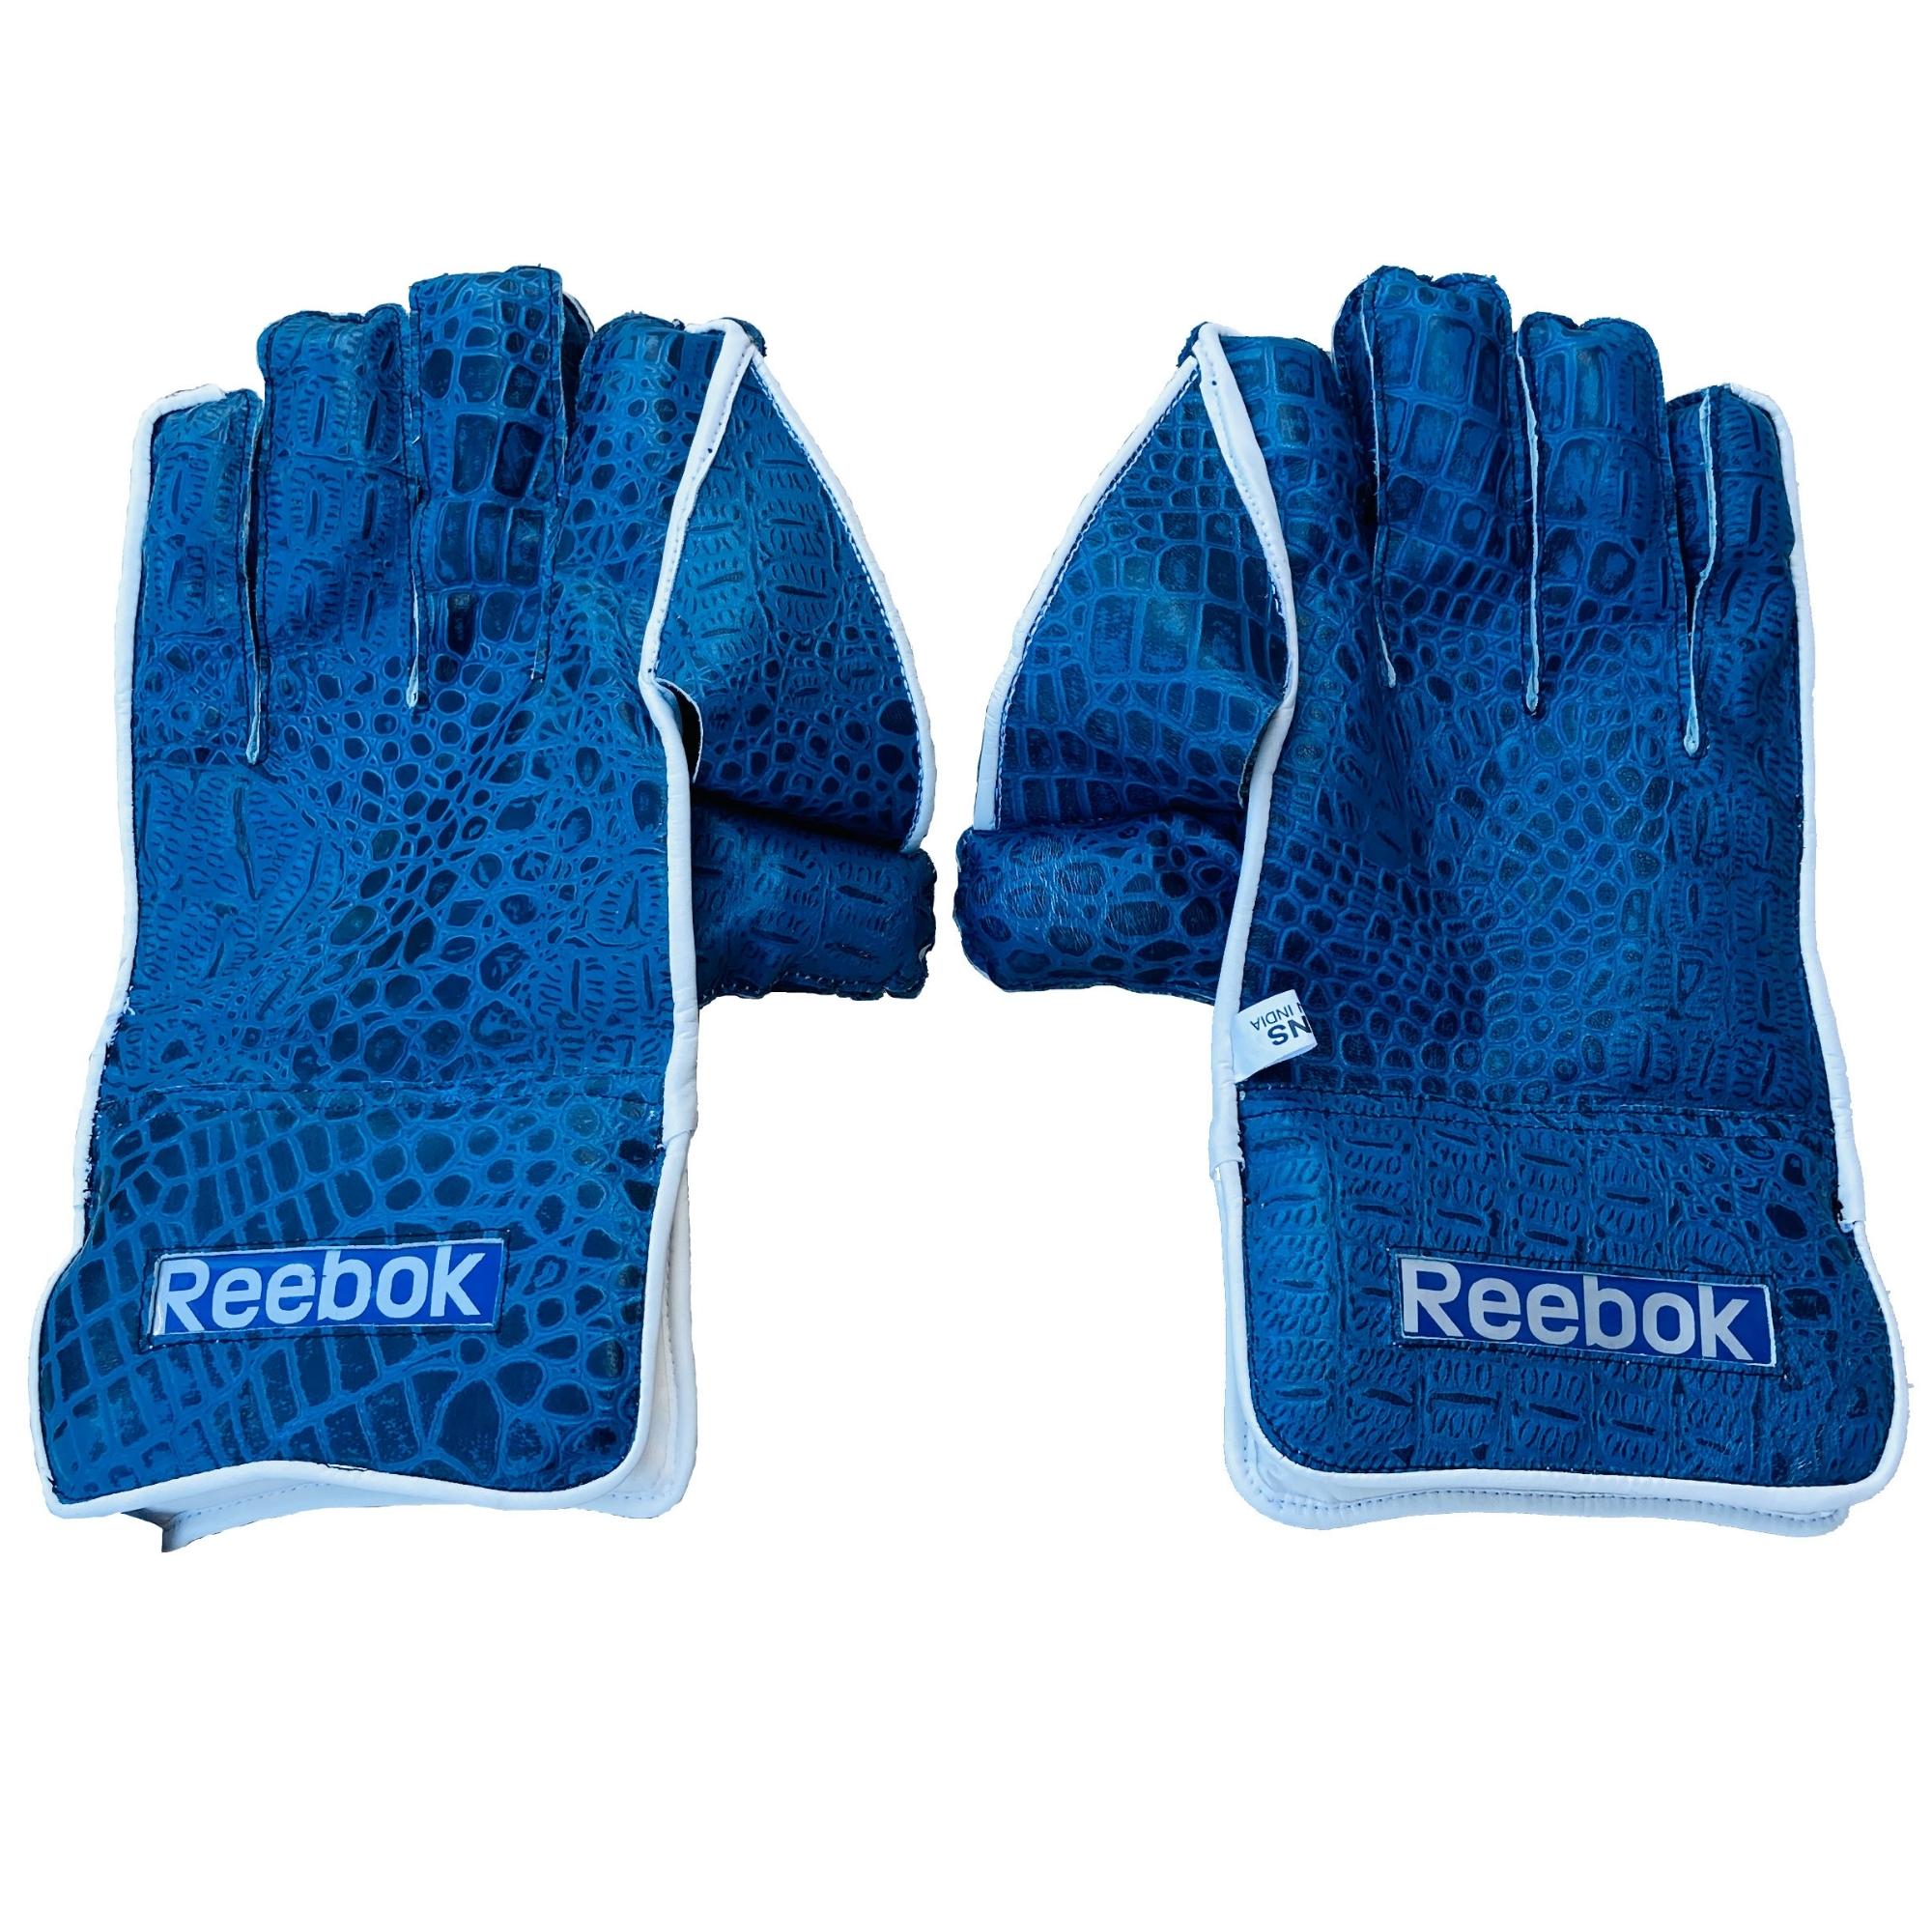 Reebok Wicket Keeping Gloves | Reebok Blue and White